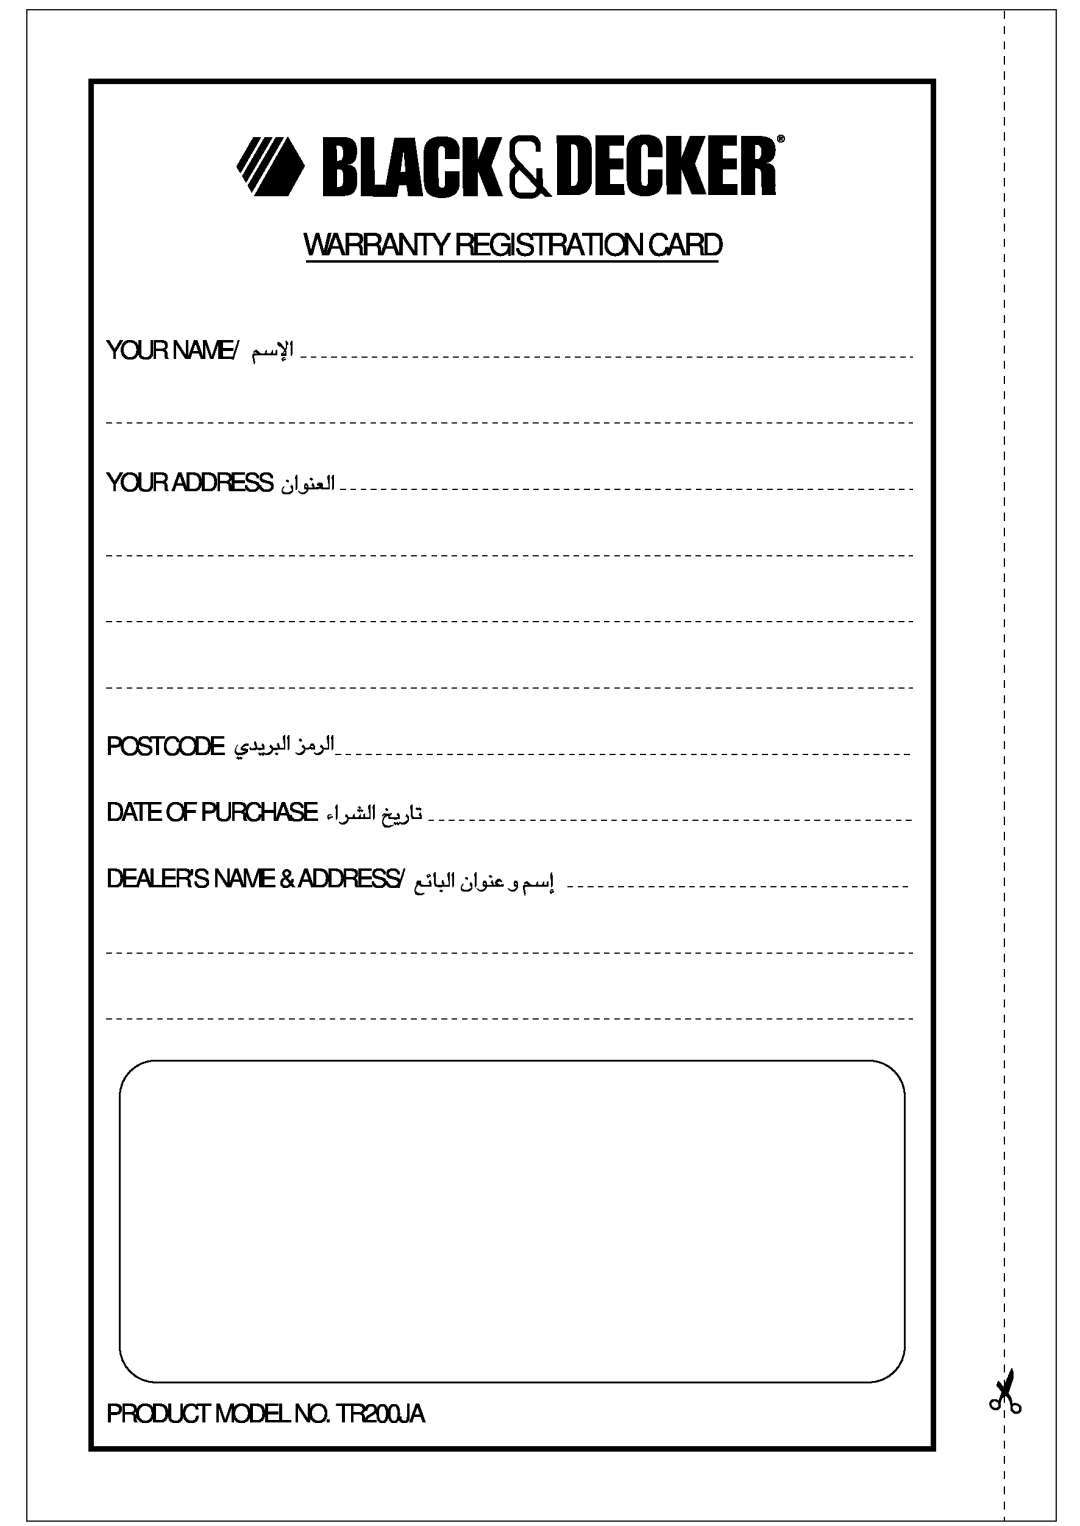 Black & Decker manual Warranty Registration Card, «ùßr, FMu«Ê∞«, d¥bÍ∞∂« d±e∞«, Ad«¡∞« ¢U¸¥a, PRODUCT MODEL NO. TR200JA 